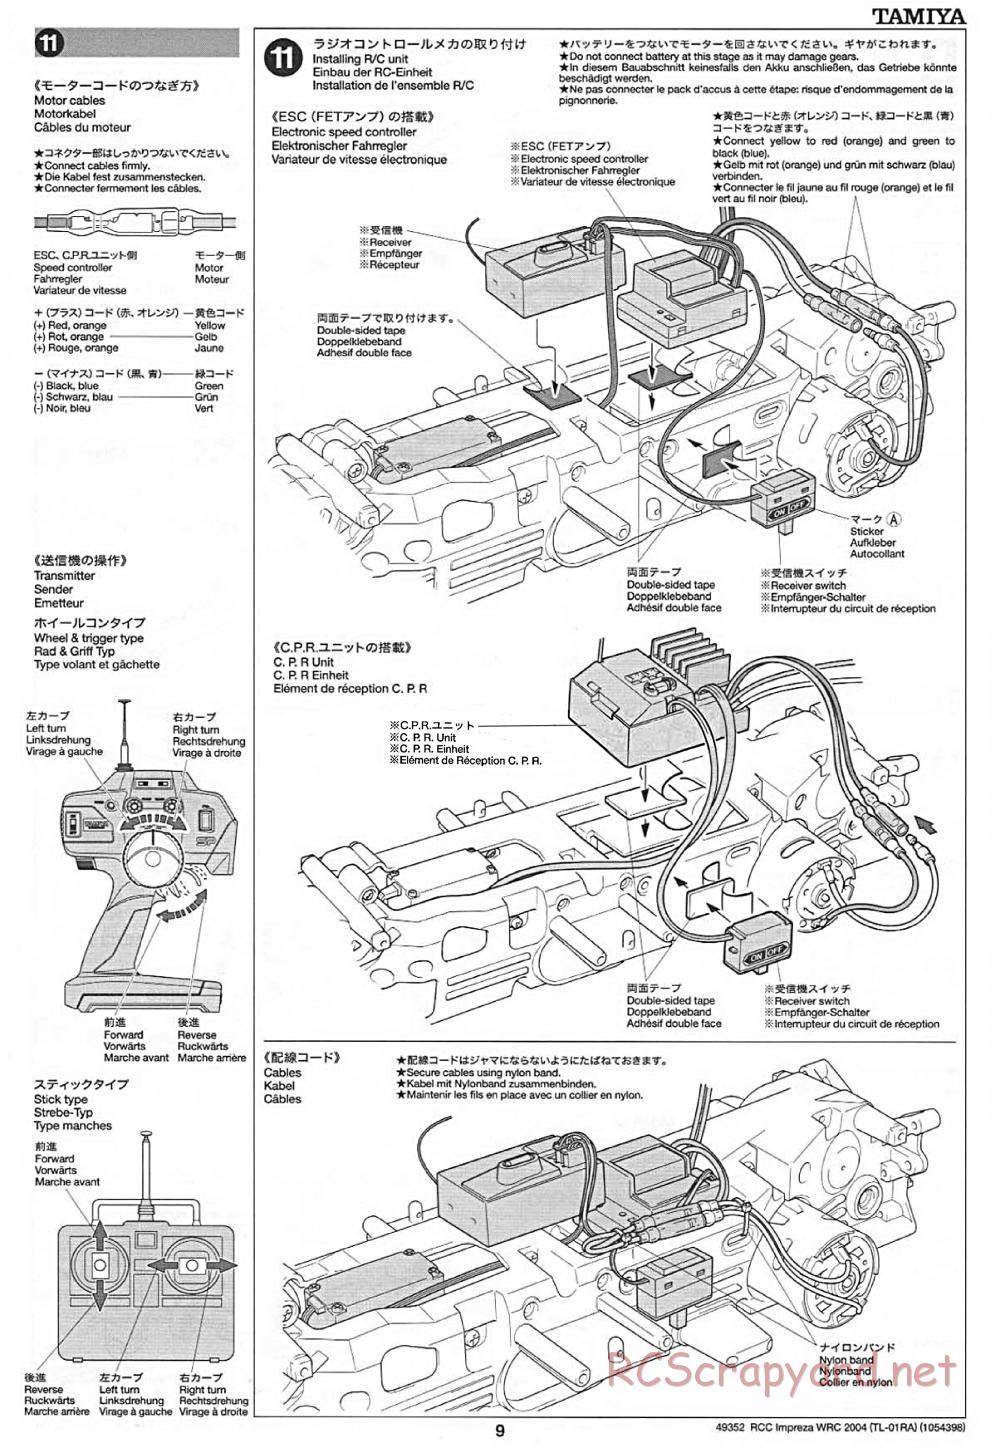 Tamiya - Subaru Impreza WRC 2004 Chassis - Manual - Page 9